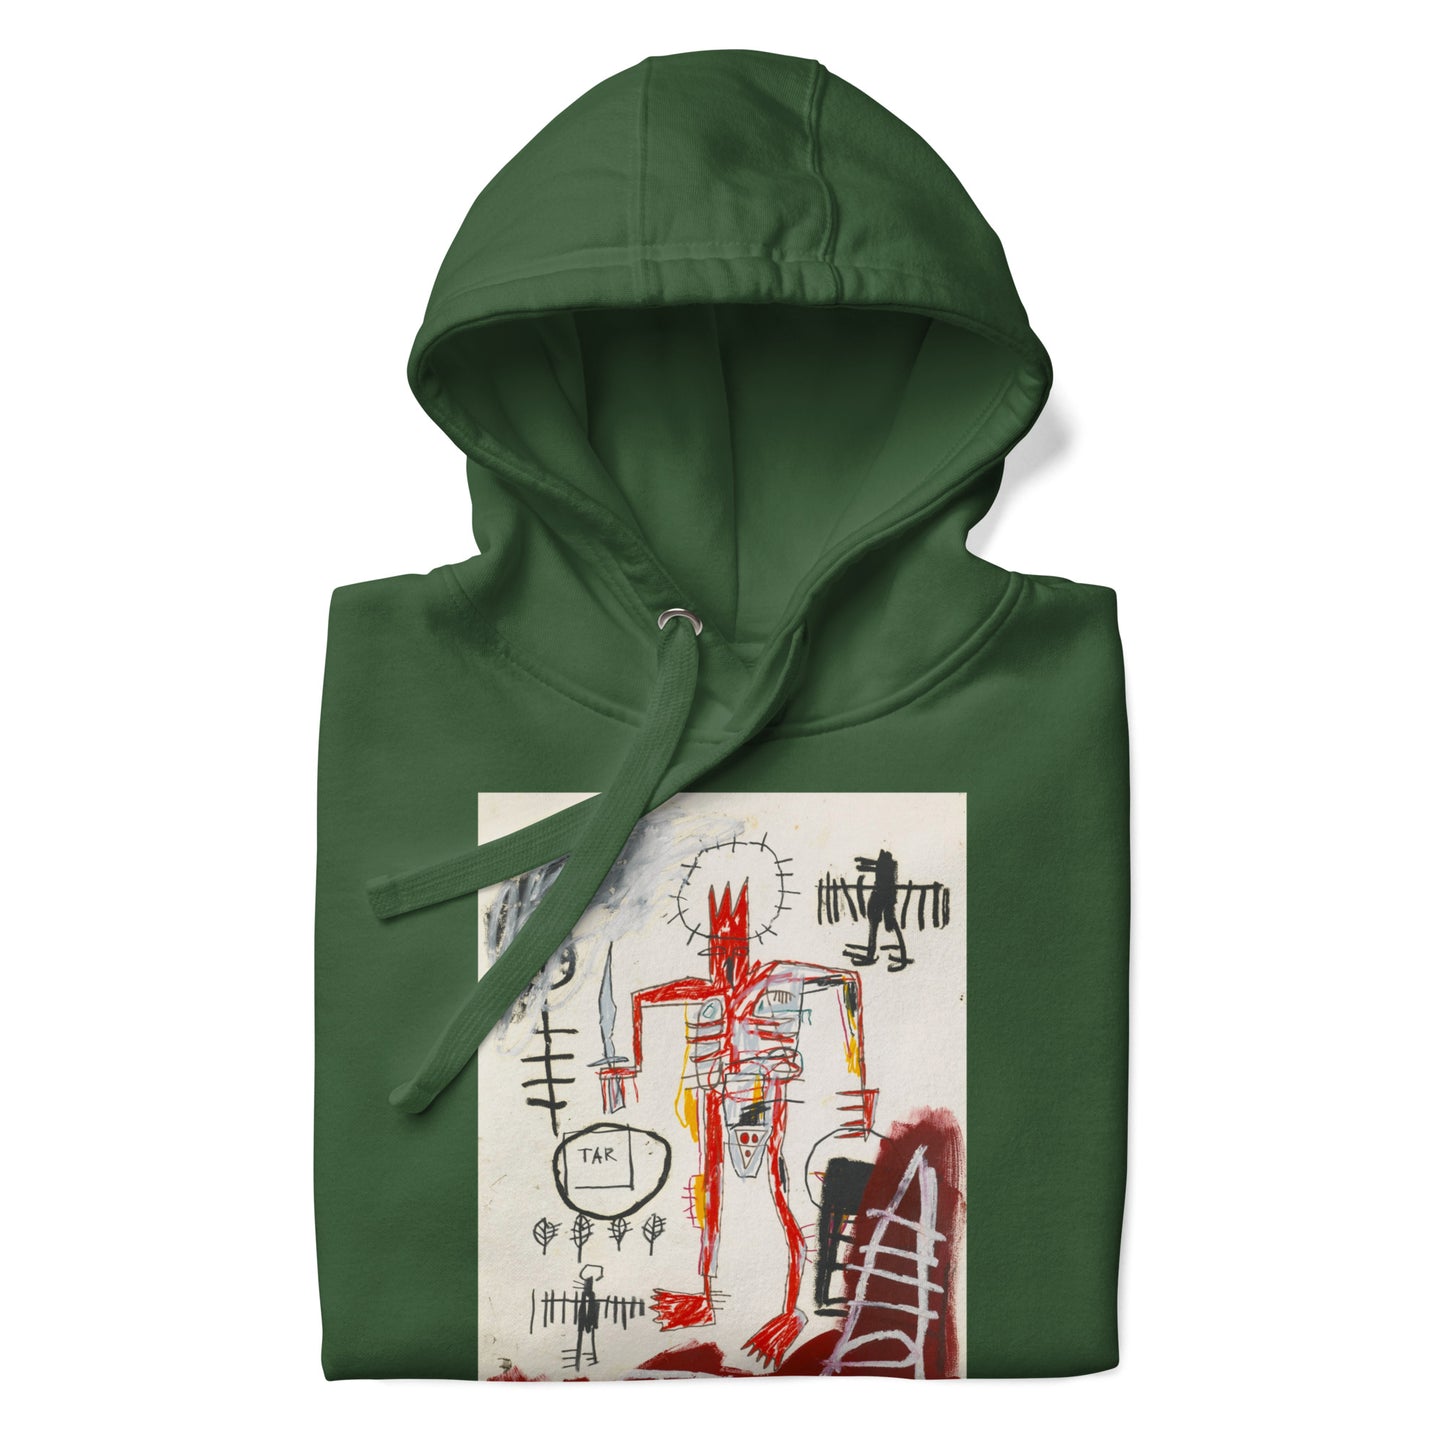 Jean-Michel Basquiat "Untitled" Artwork Printed Premium Streetwear Sweatshirt Hoodie Forest Green